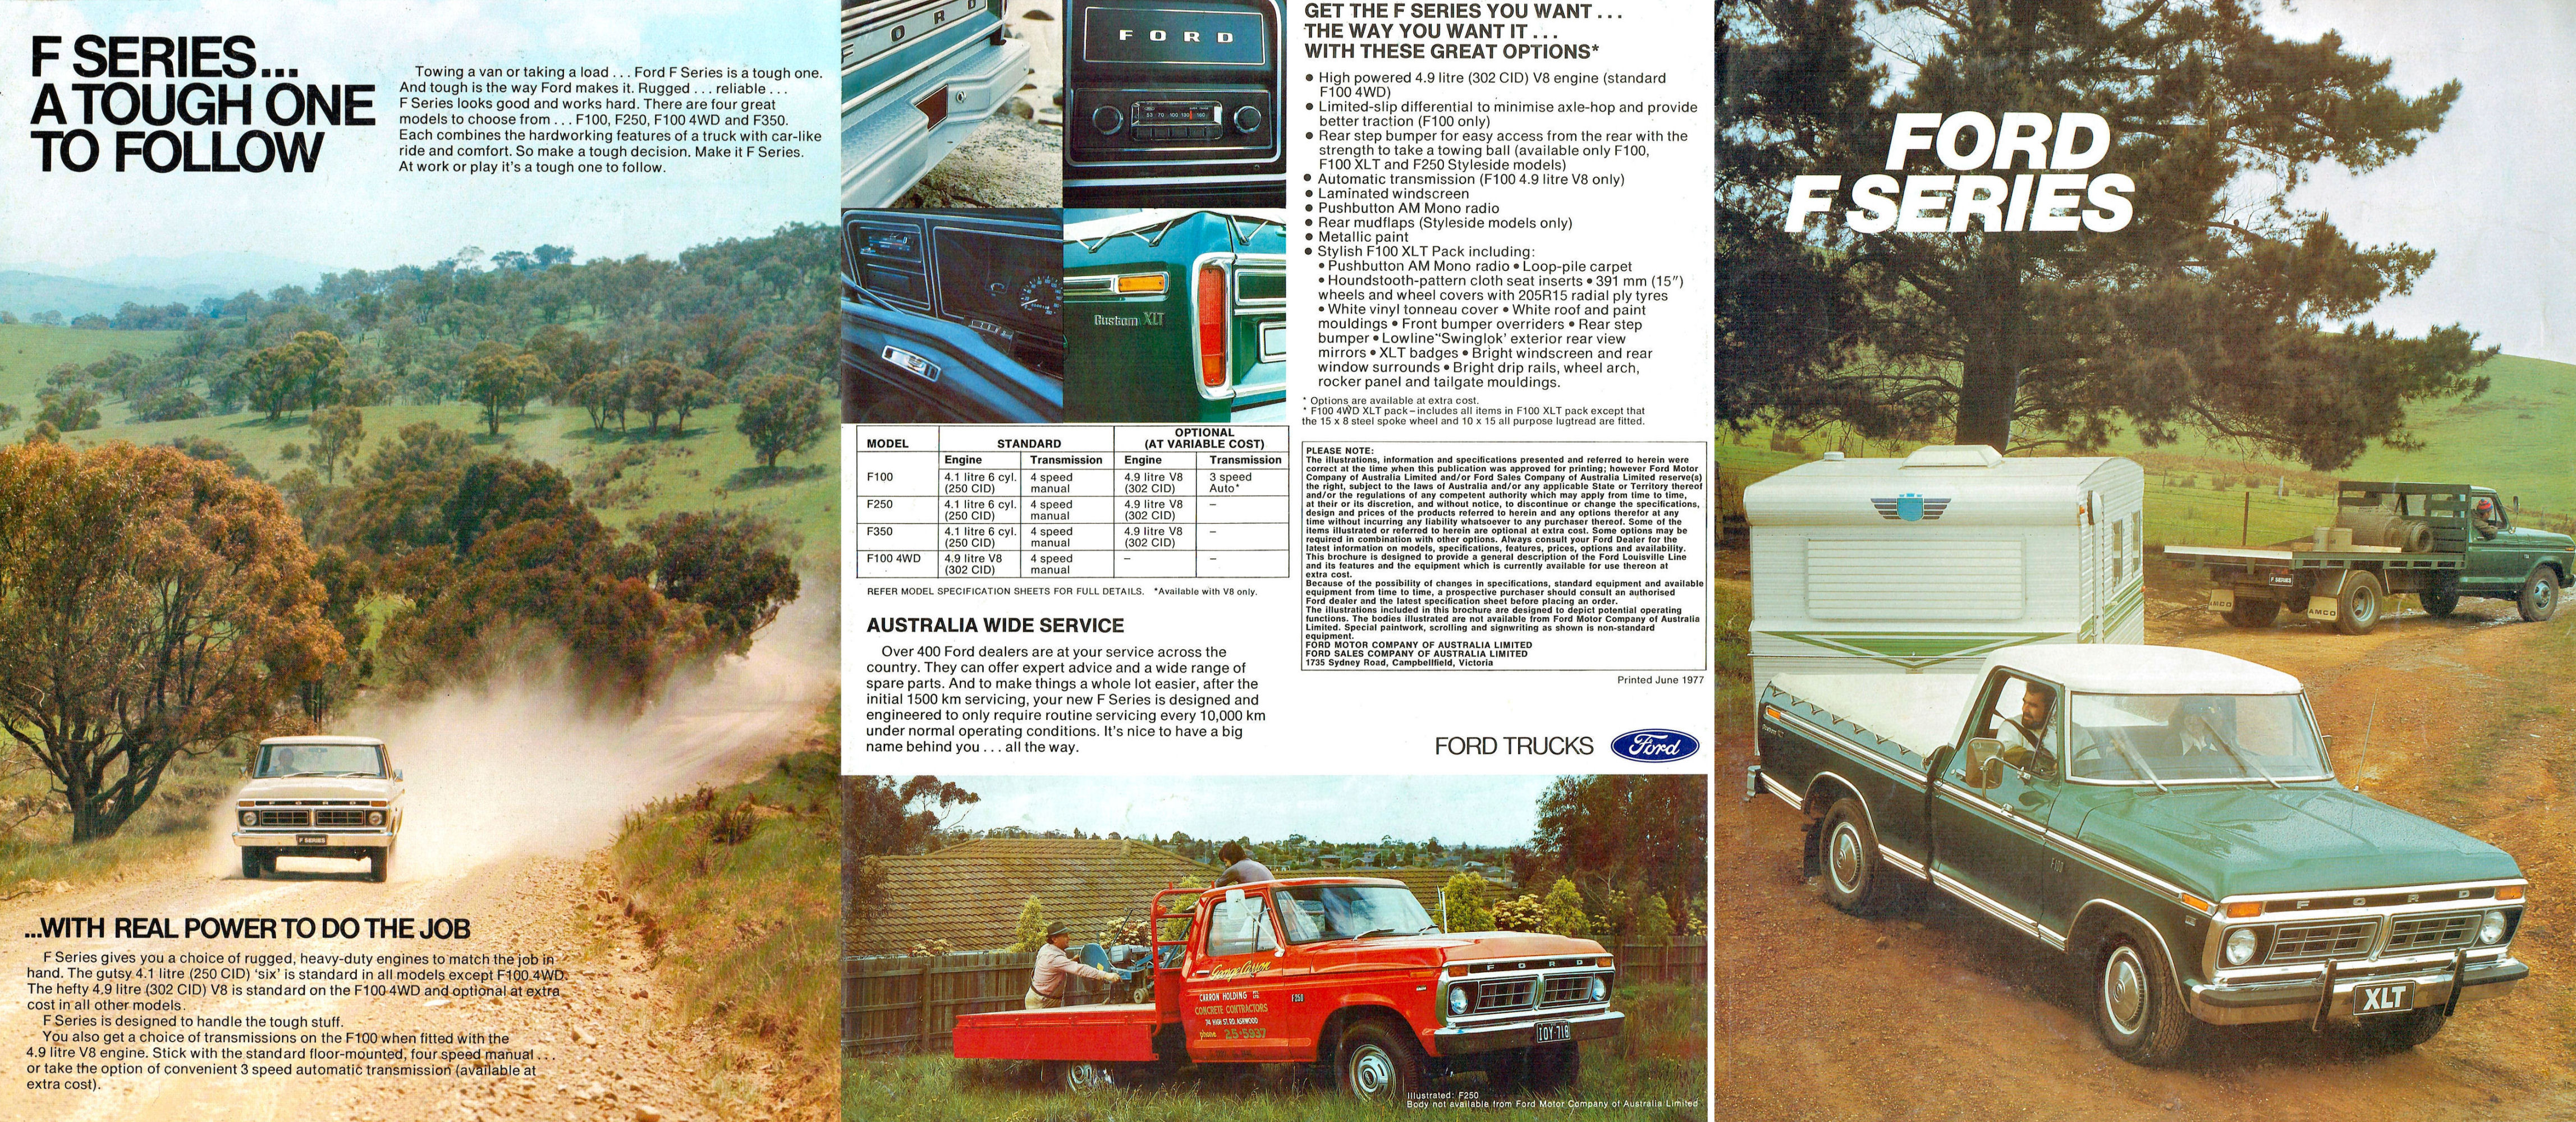 1977 Ford F Series Trucks (Aus)-Side A